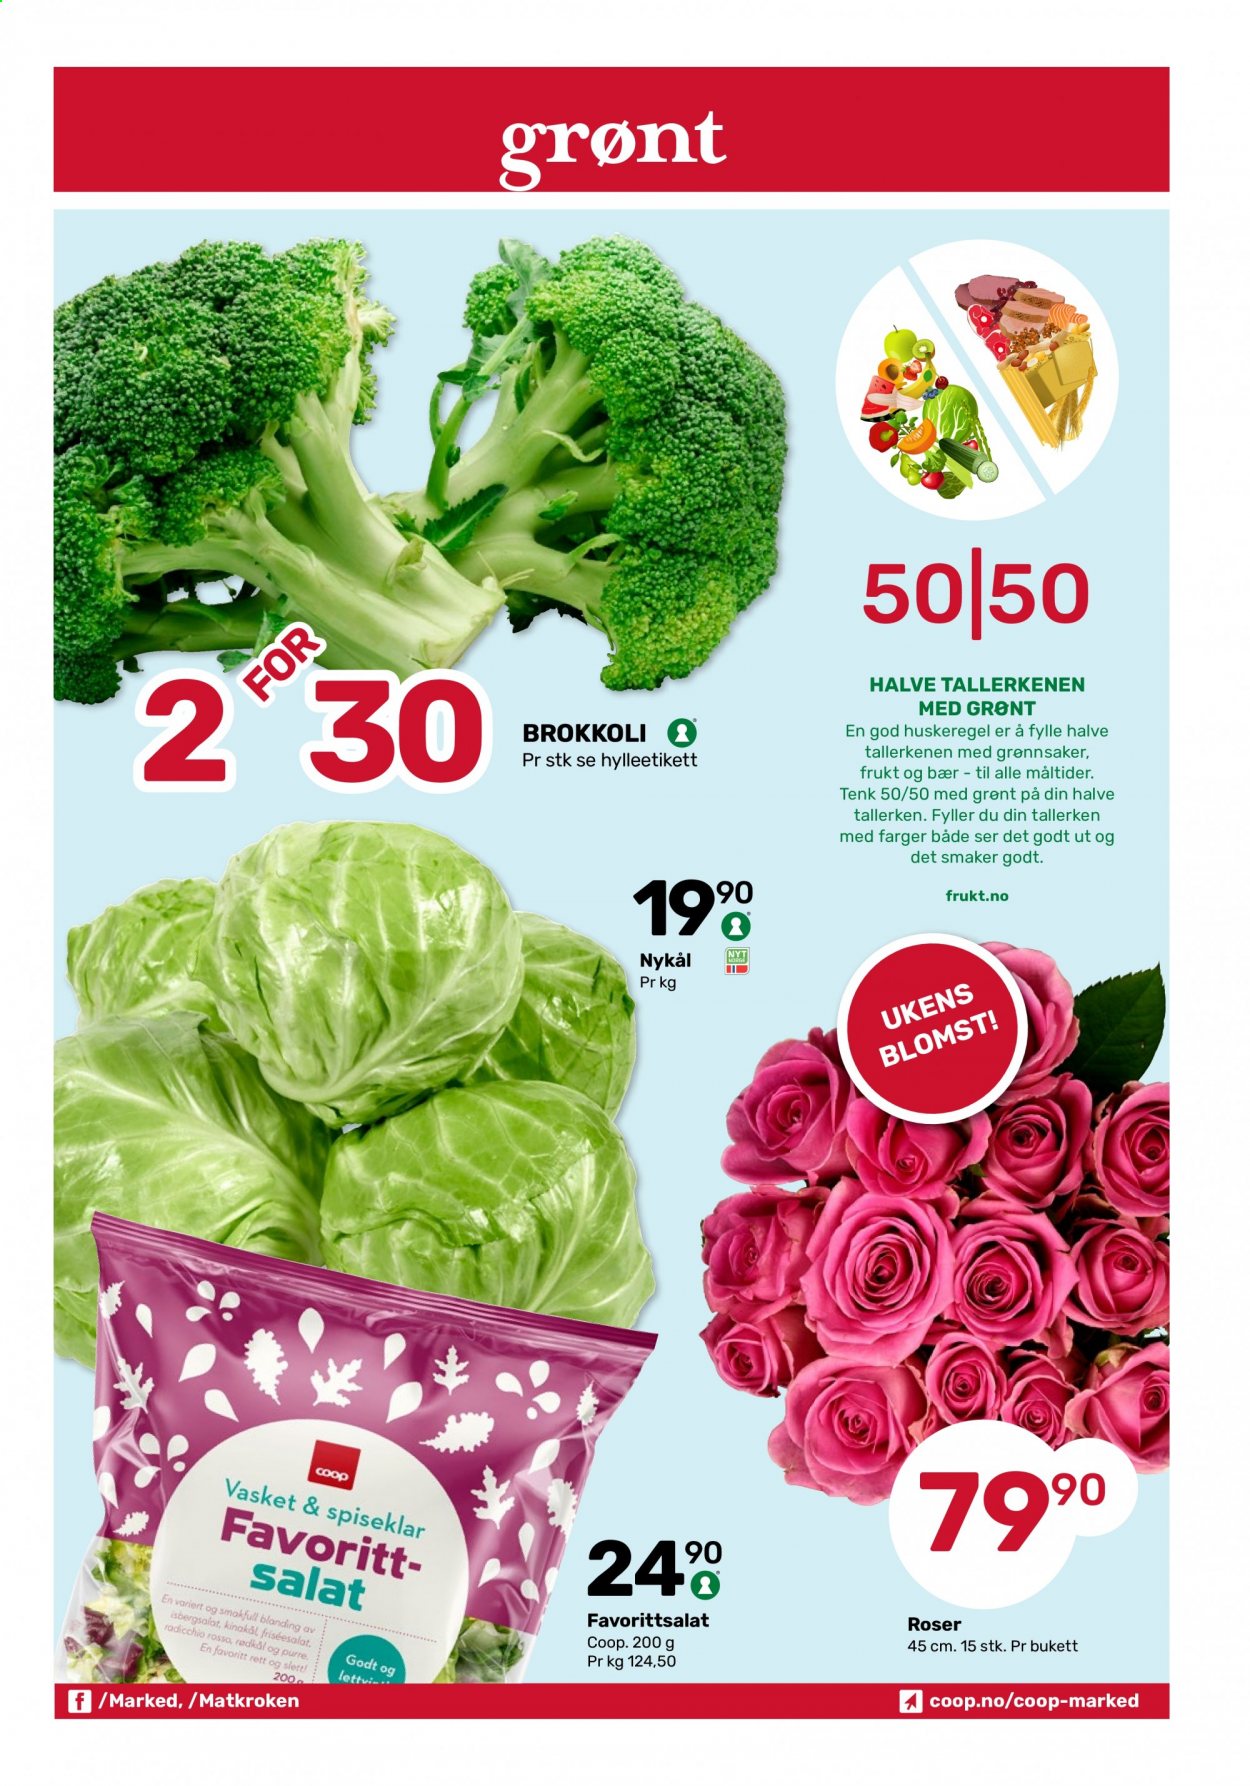 thumbnail - Kundeavis Coop Marked - 14.6.2021 - 26.6.2021 - Produkter fra tilbudsaviser - brokkoli, friséesalat, isbergsalat, kinakål, nykål, purre, radicchio, radicchio rosso, salat. Side 3.